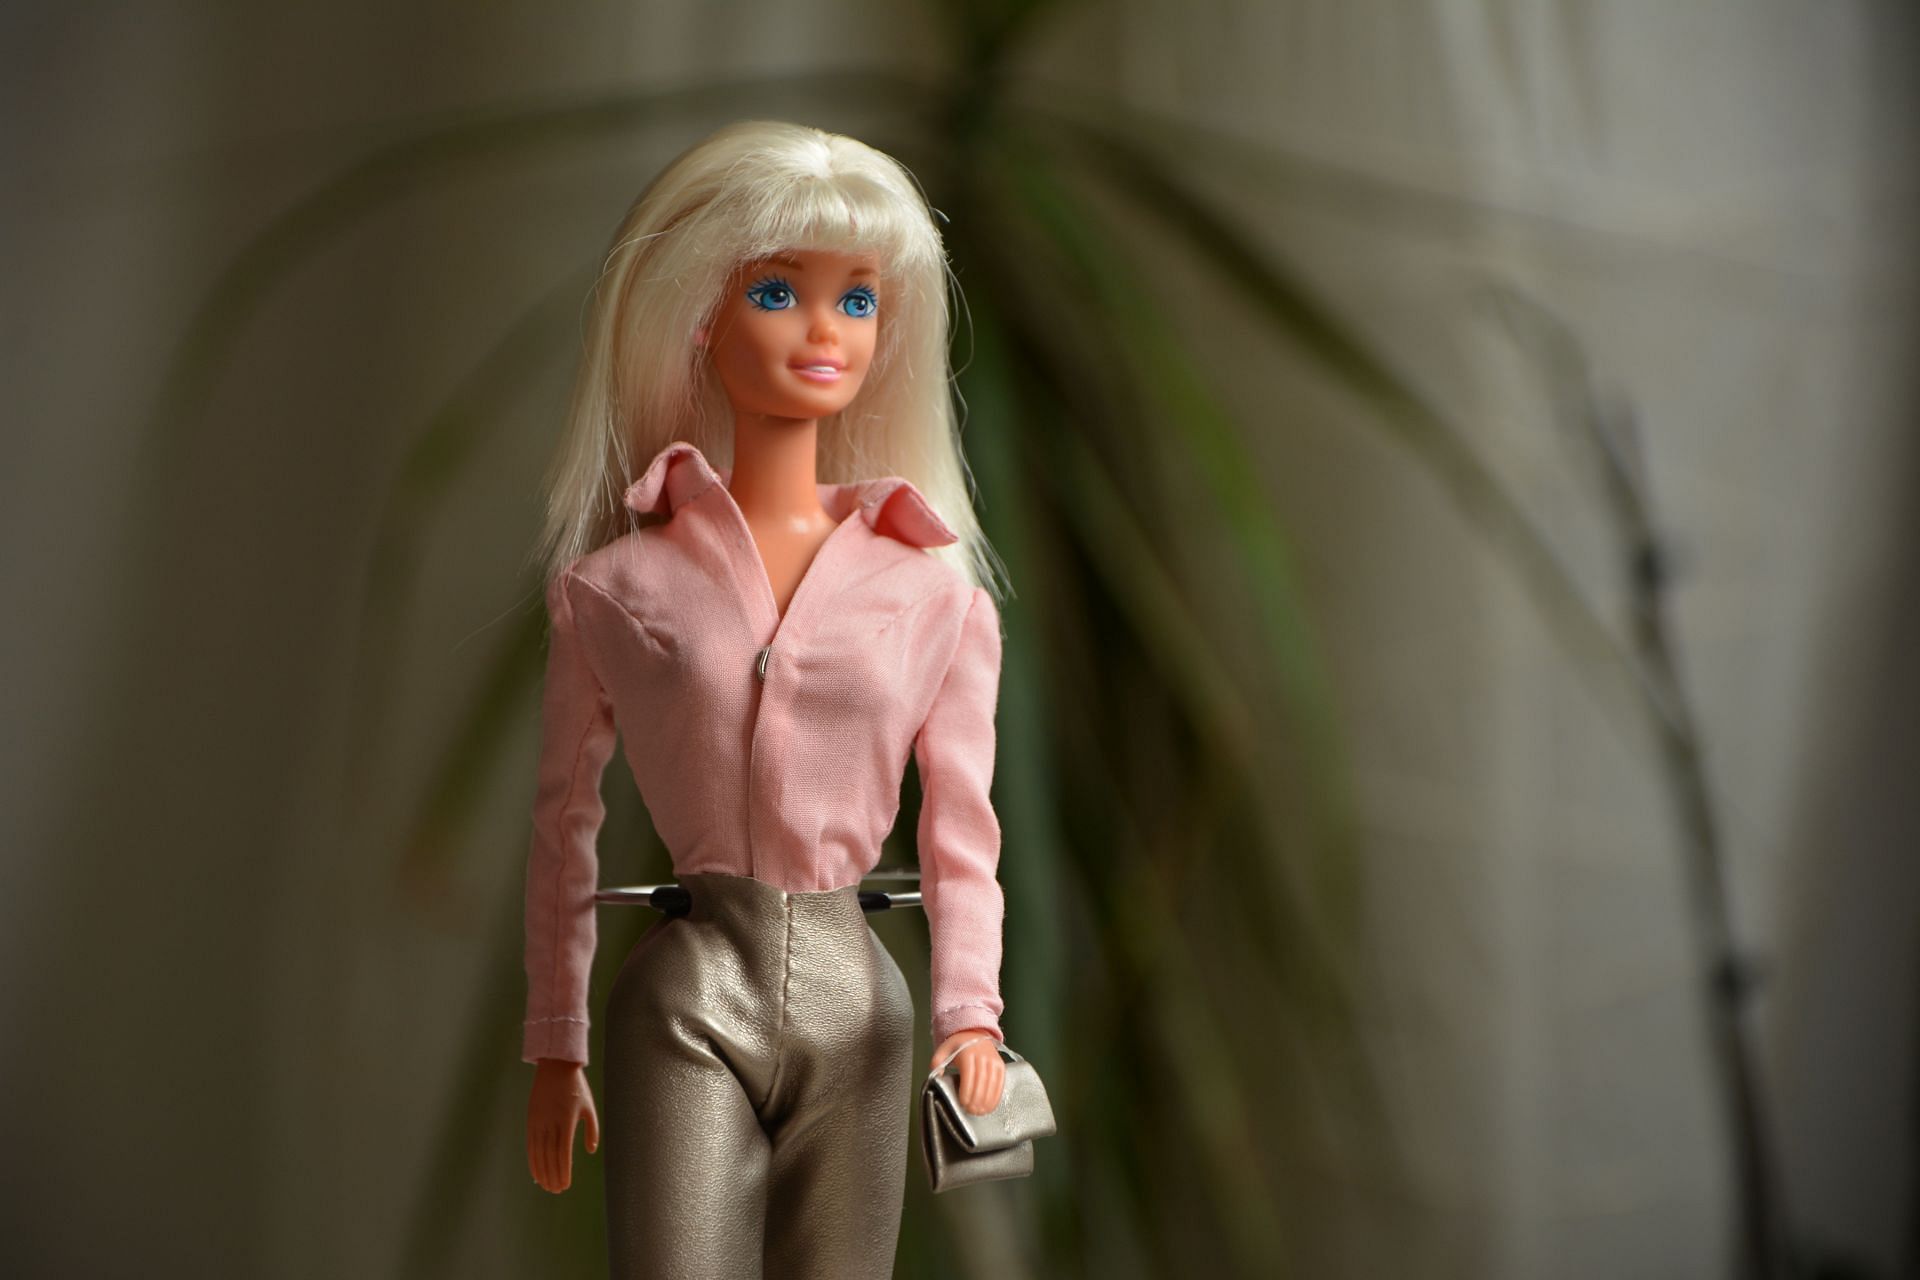 Real-life Barbie lookalike models around the world (Image via Unsplash/Elena Mishlanova)